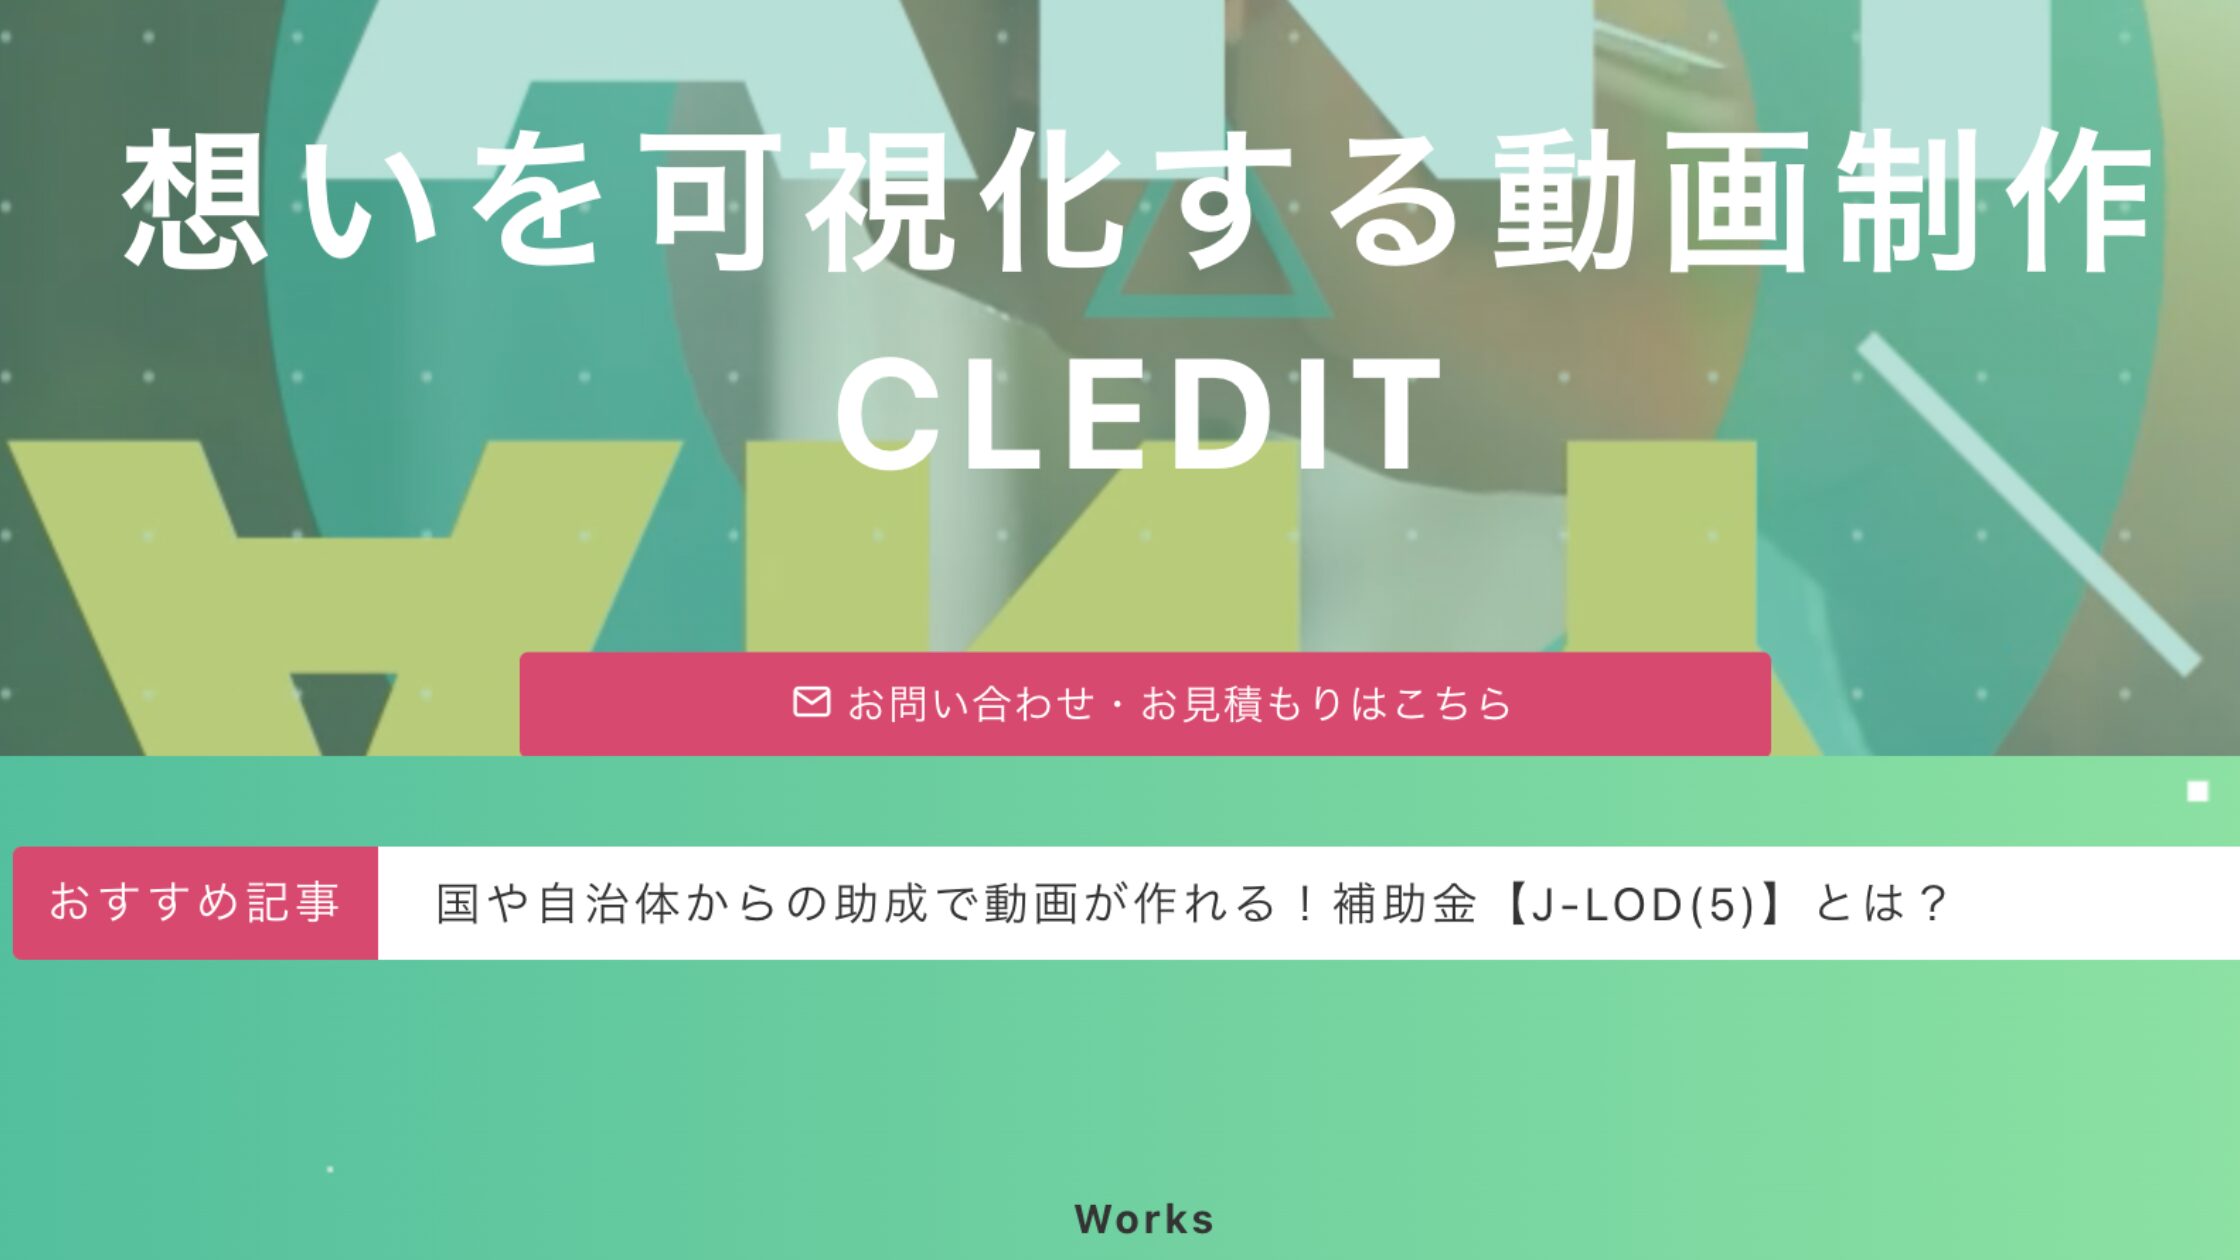 CLEDIT（カルチュアルライフ株式会社）